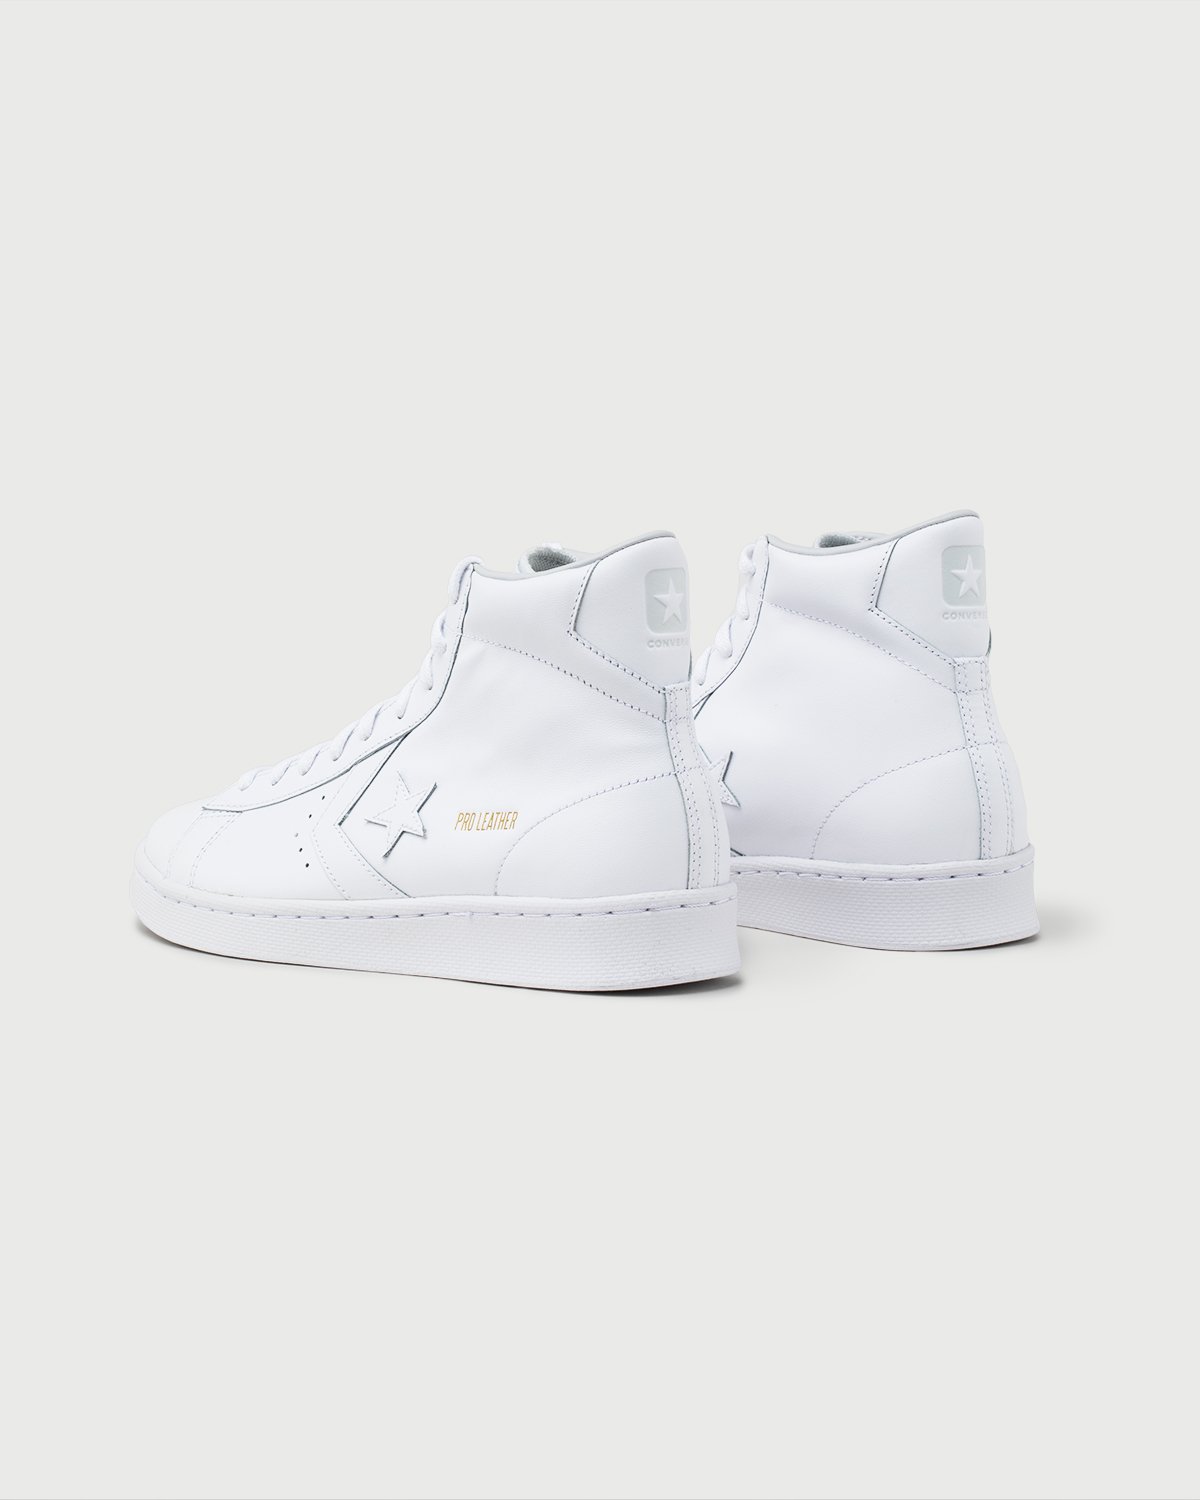 Converse - Pro Leather Hi White - Footwear - White - Image 3